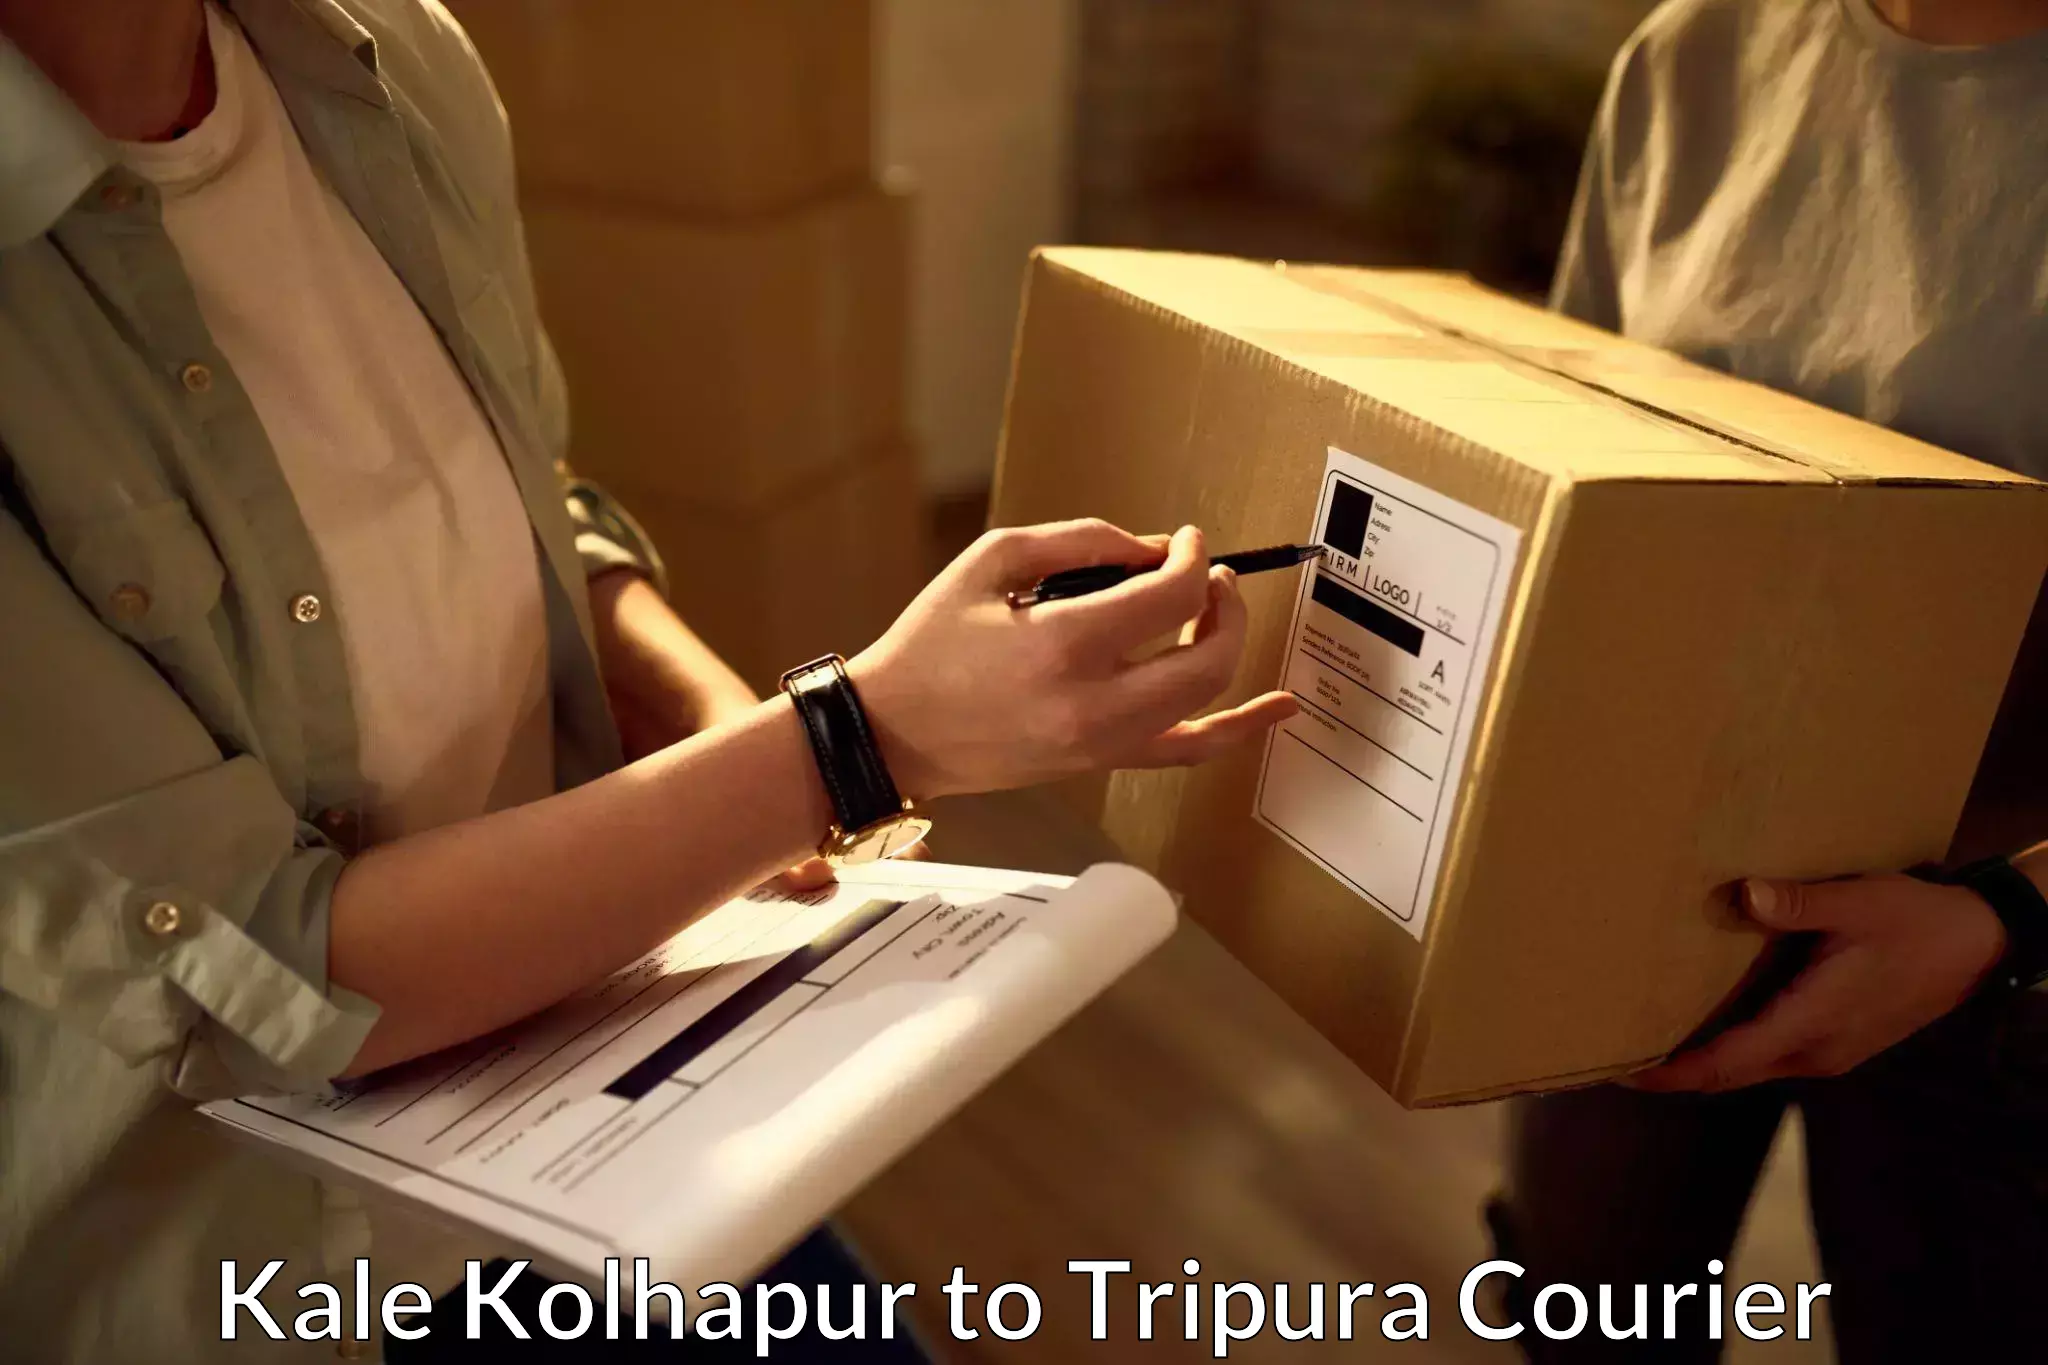 Special handling courier Kale Kolhapur to Tripura